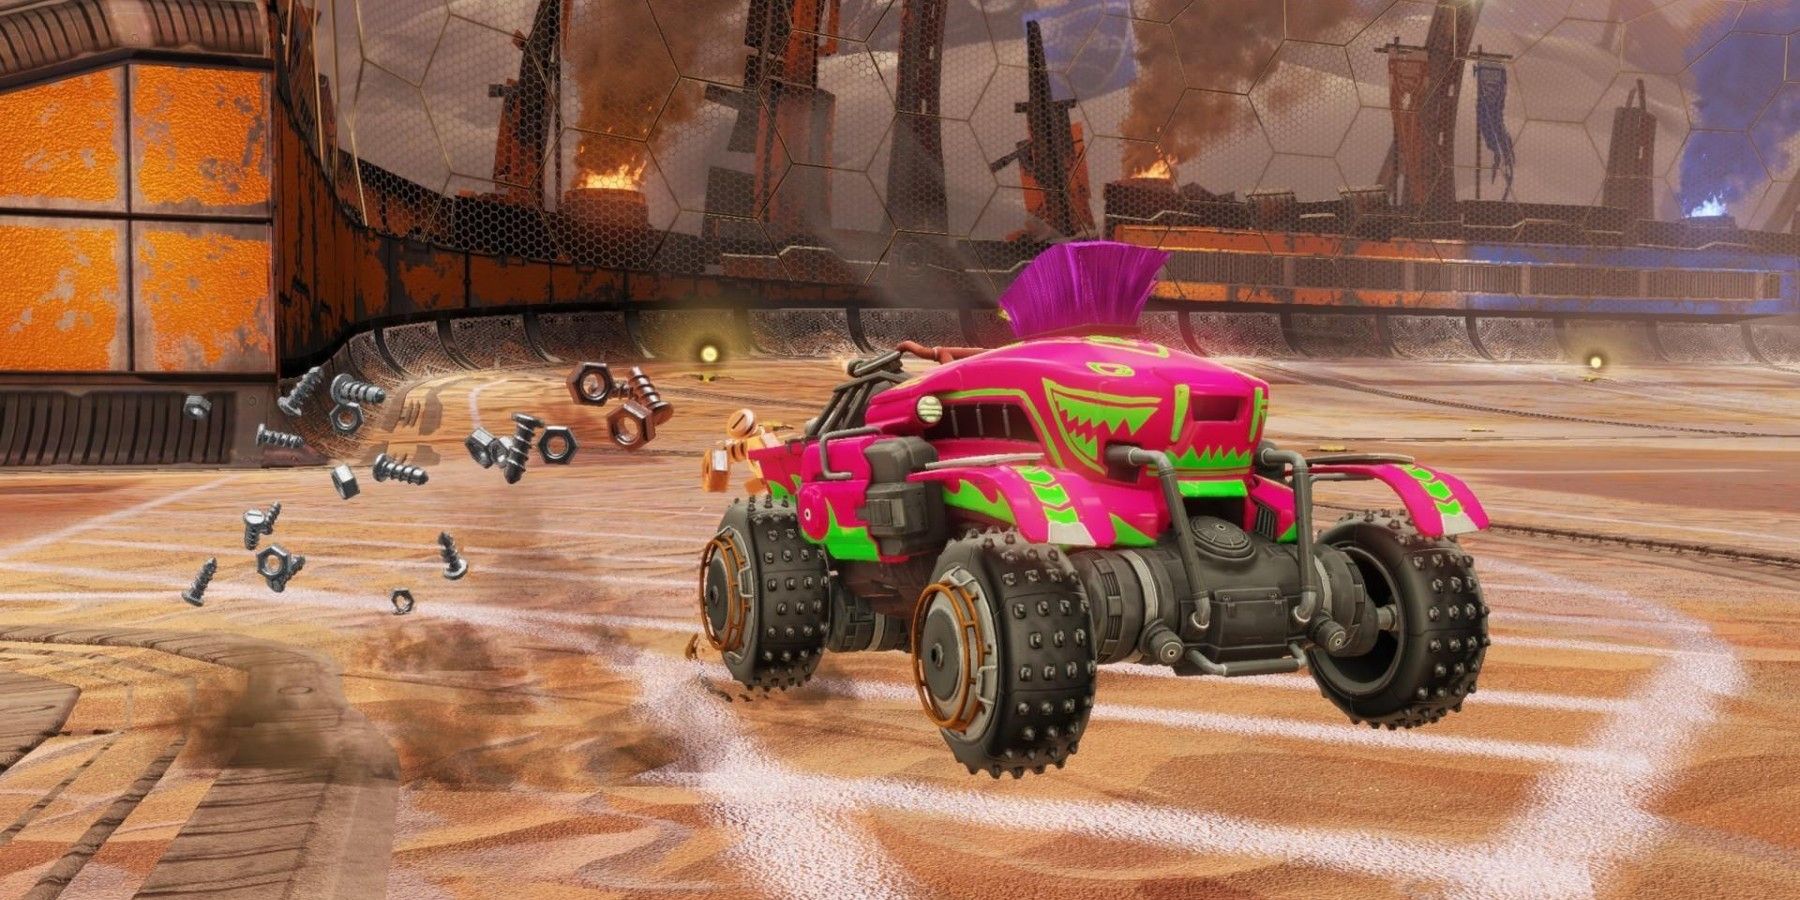 Rocket League Grog car kicking up dust desert arena